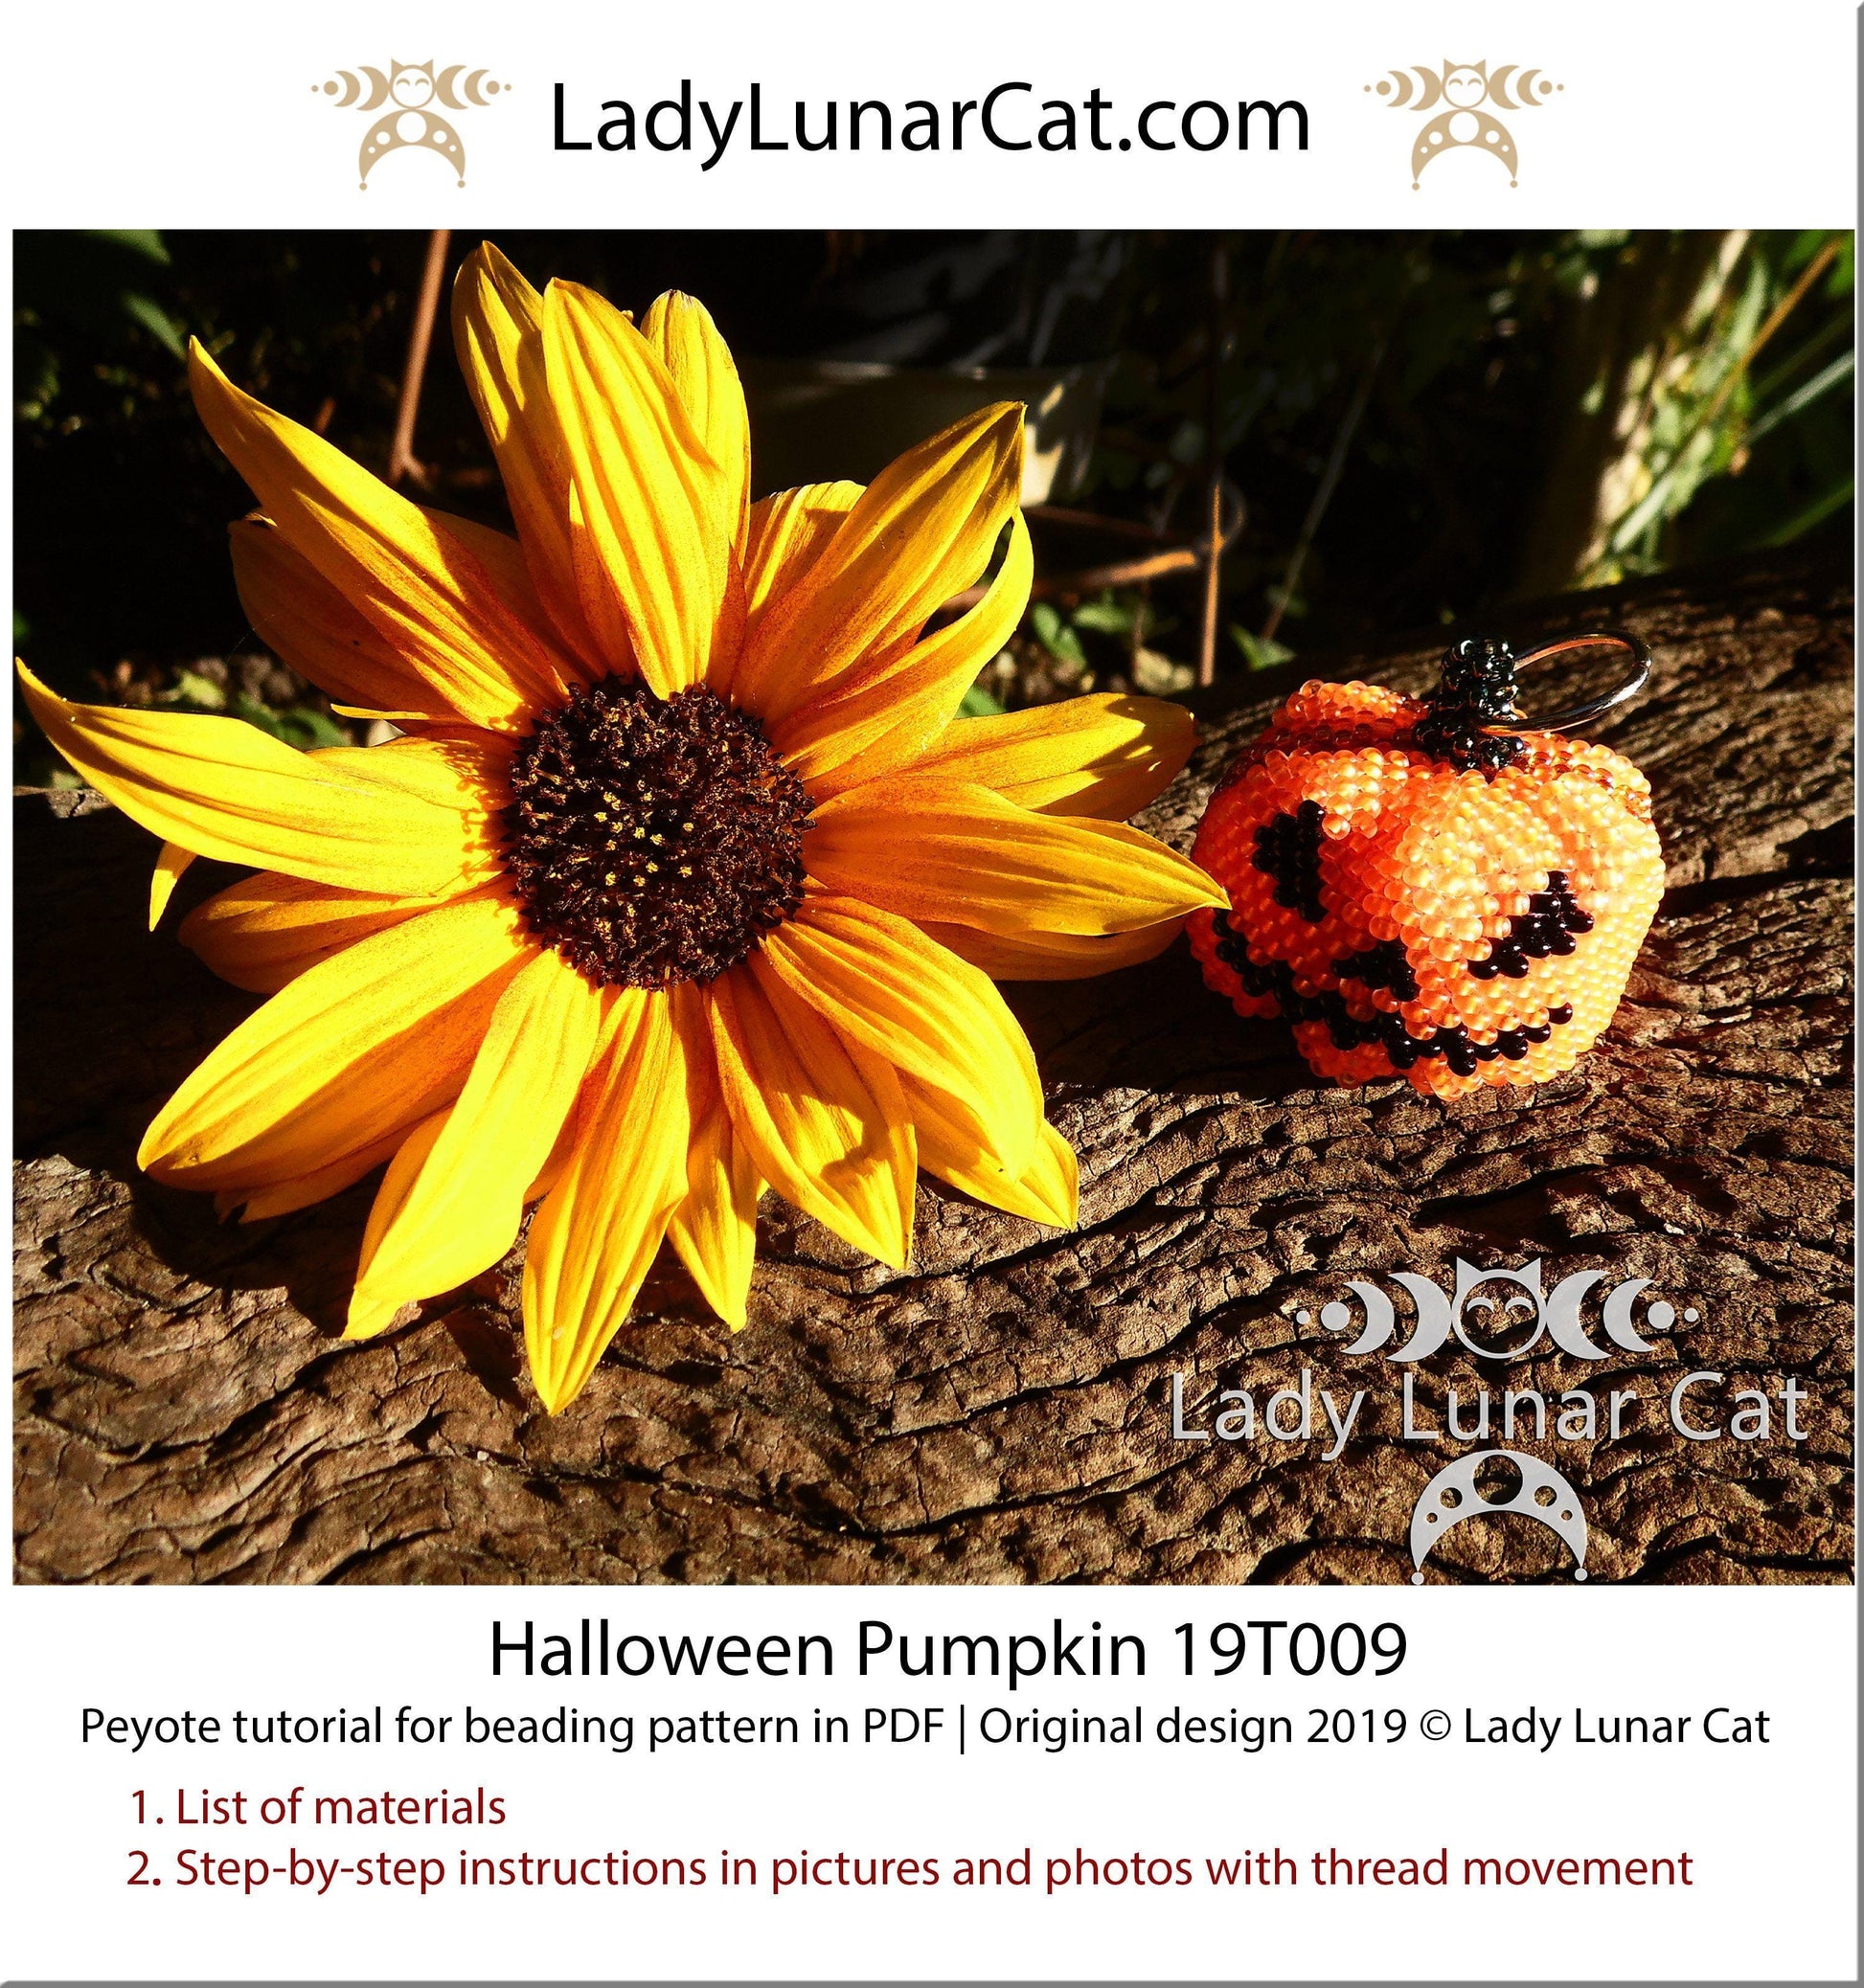 Beading tutorial for 3d peyote pod Pumpkin Halloween 19PT009 LadyLunarCat